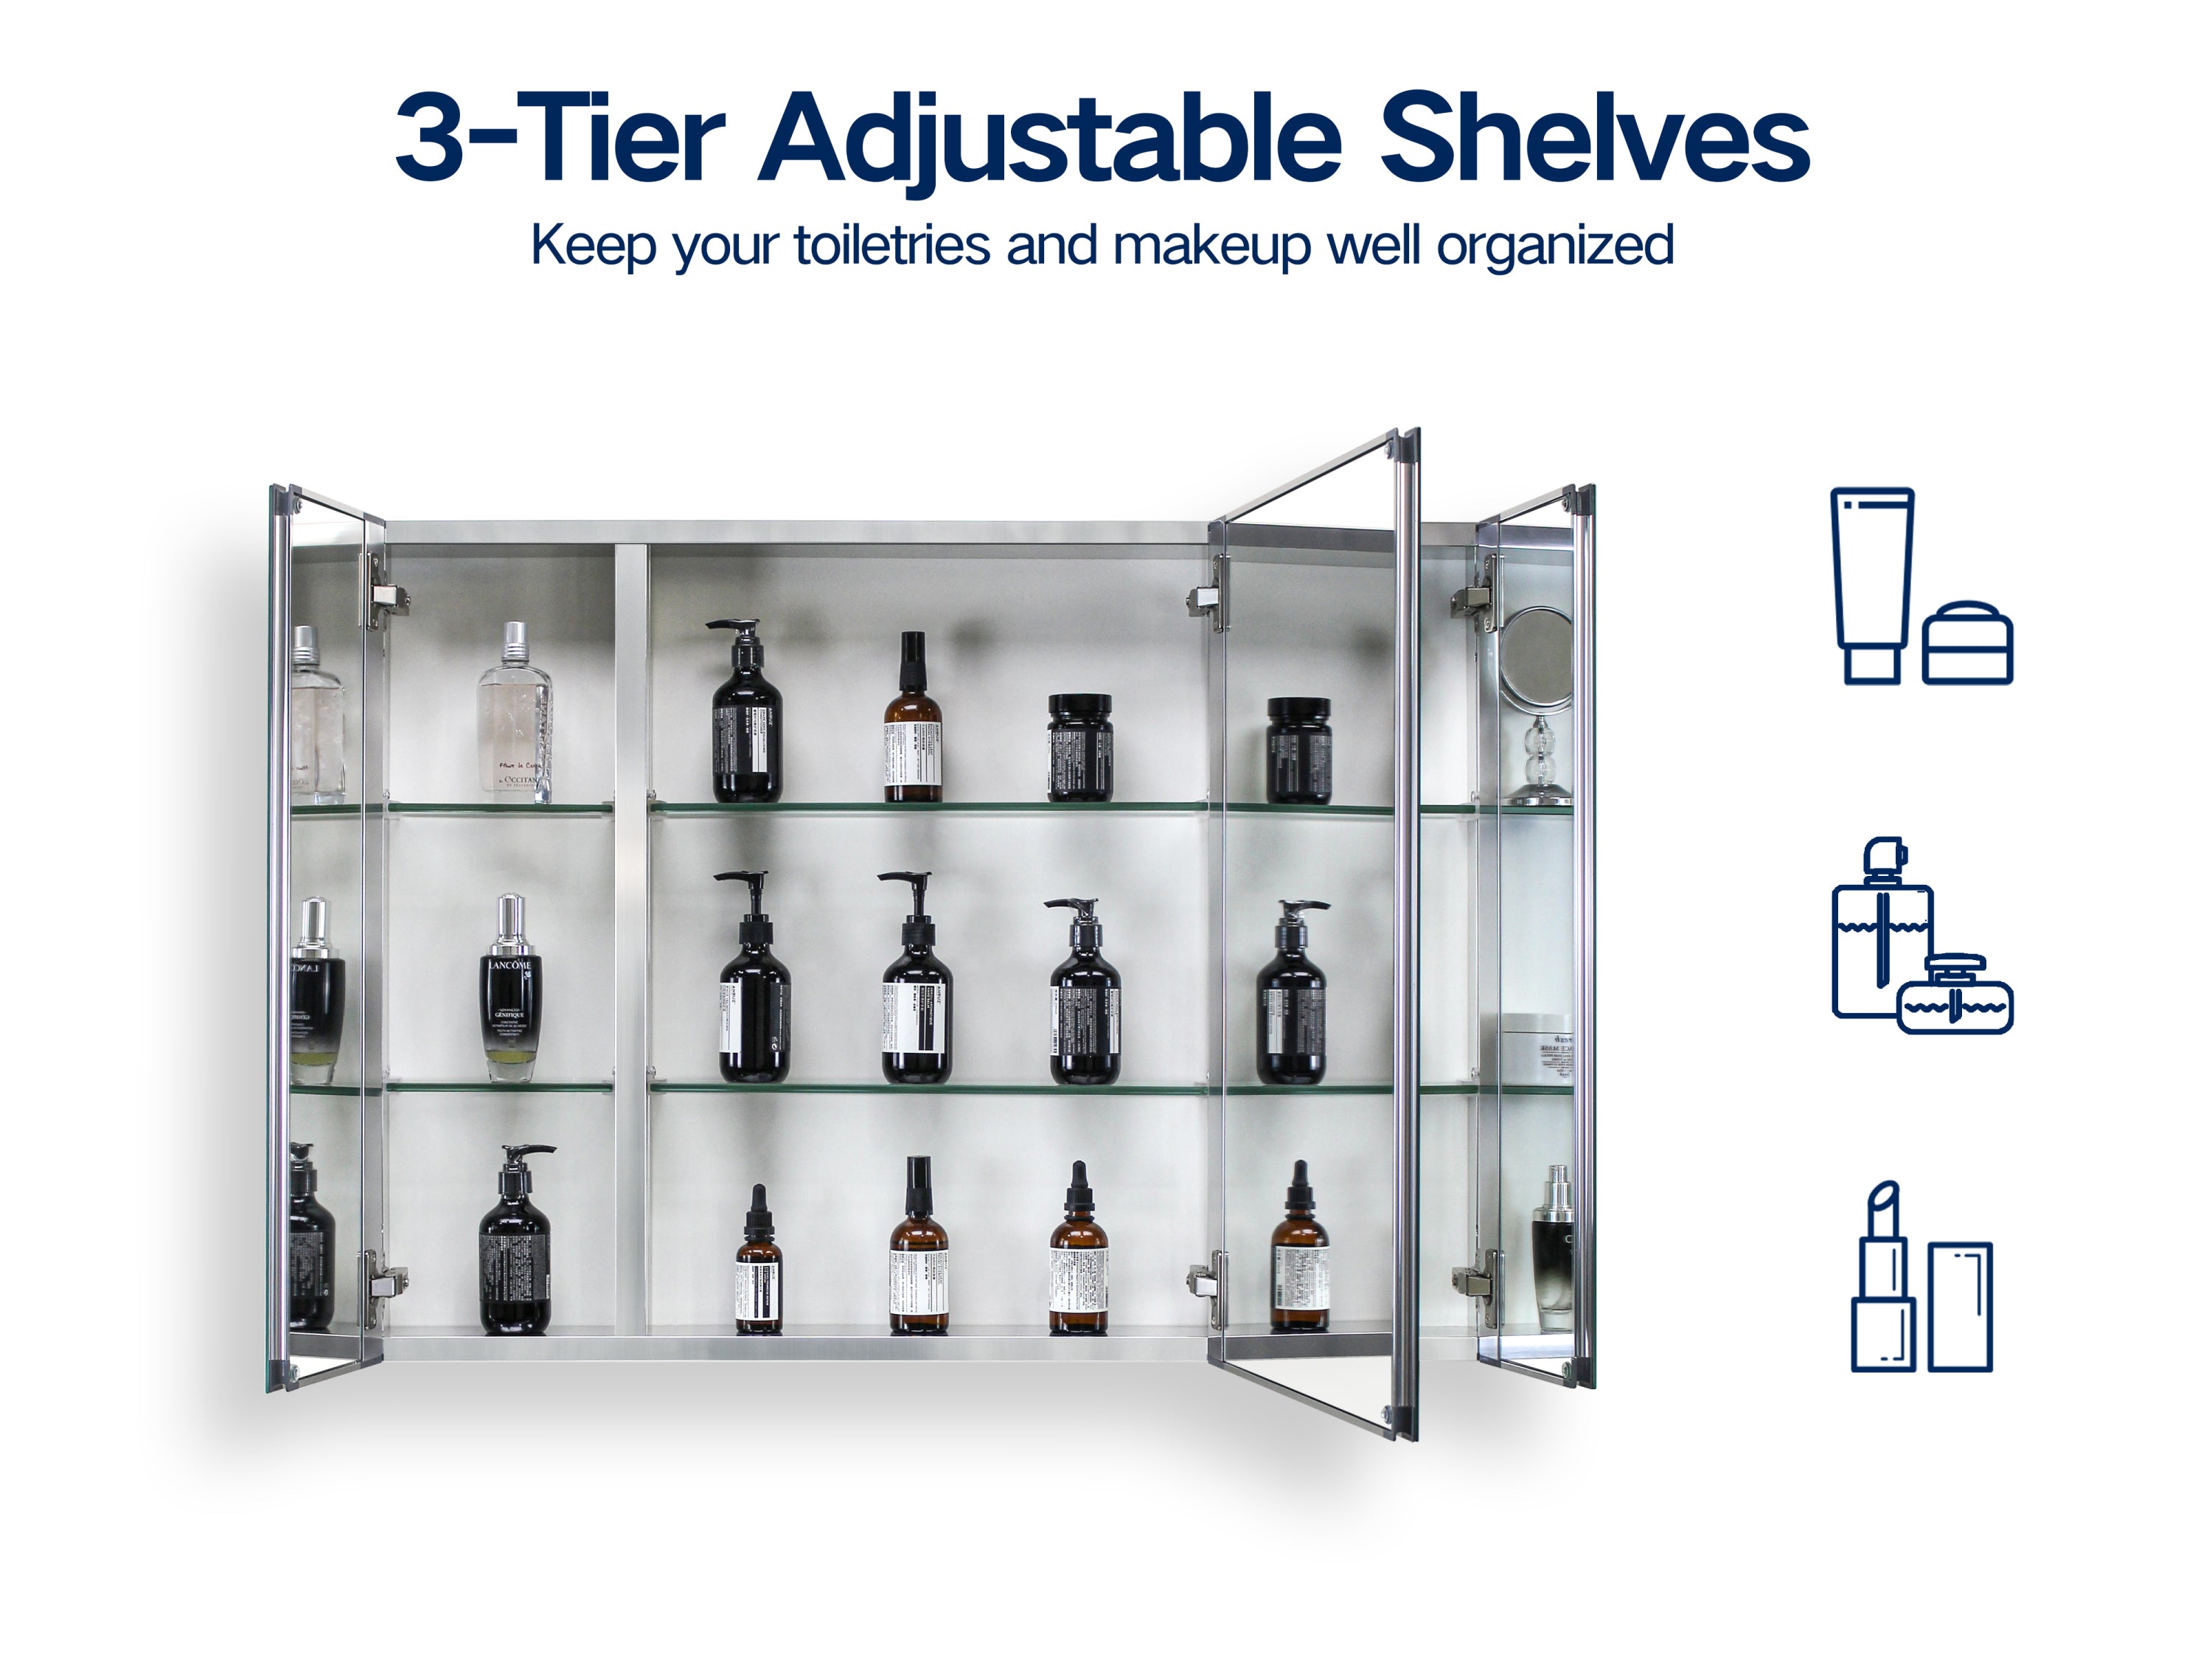 36x26 inch Aluminum Bathroom Medicine Cabinet, Adjustable Glass Shelves, Waterproof and Rust-Resist, Recess or Surface Mount Installation